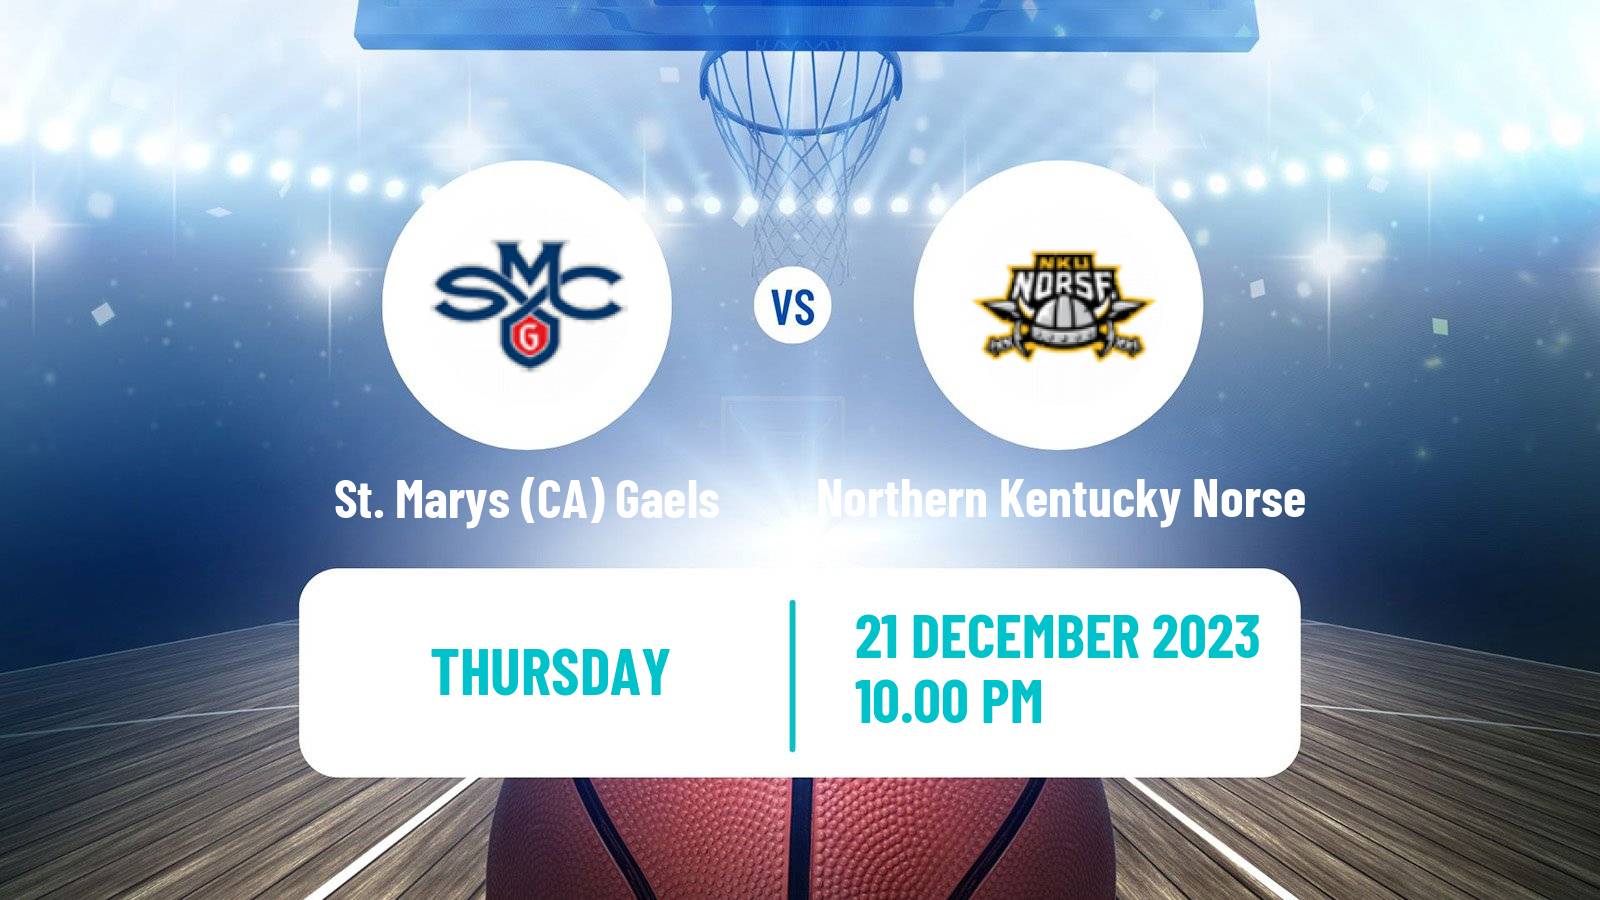 Basketball NCAA College Basketball St. Marys (CA) Gaels - Northern Kentucky Norse